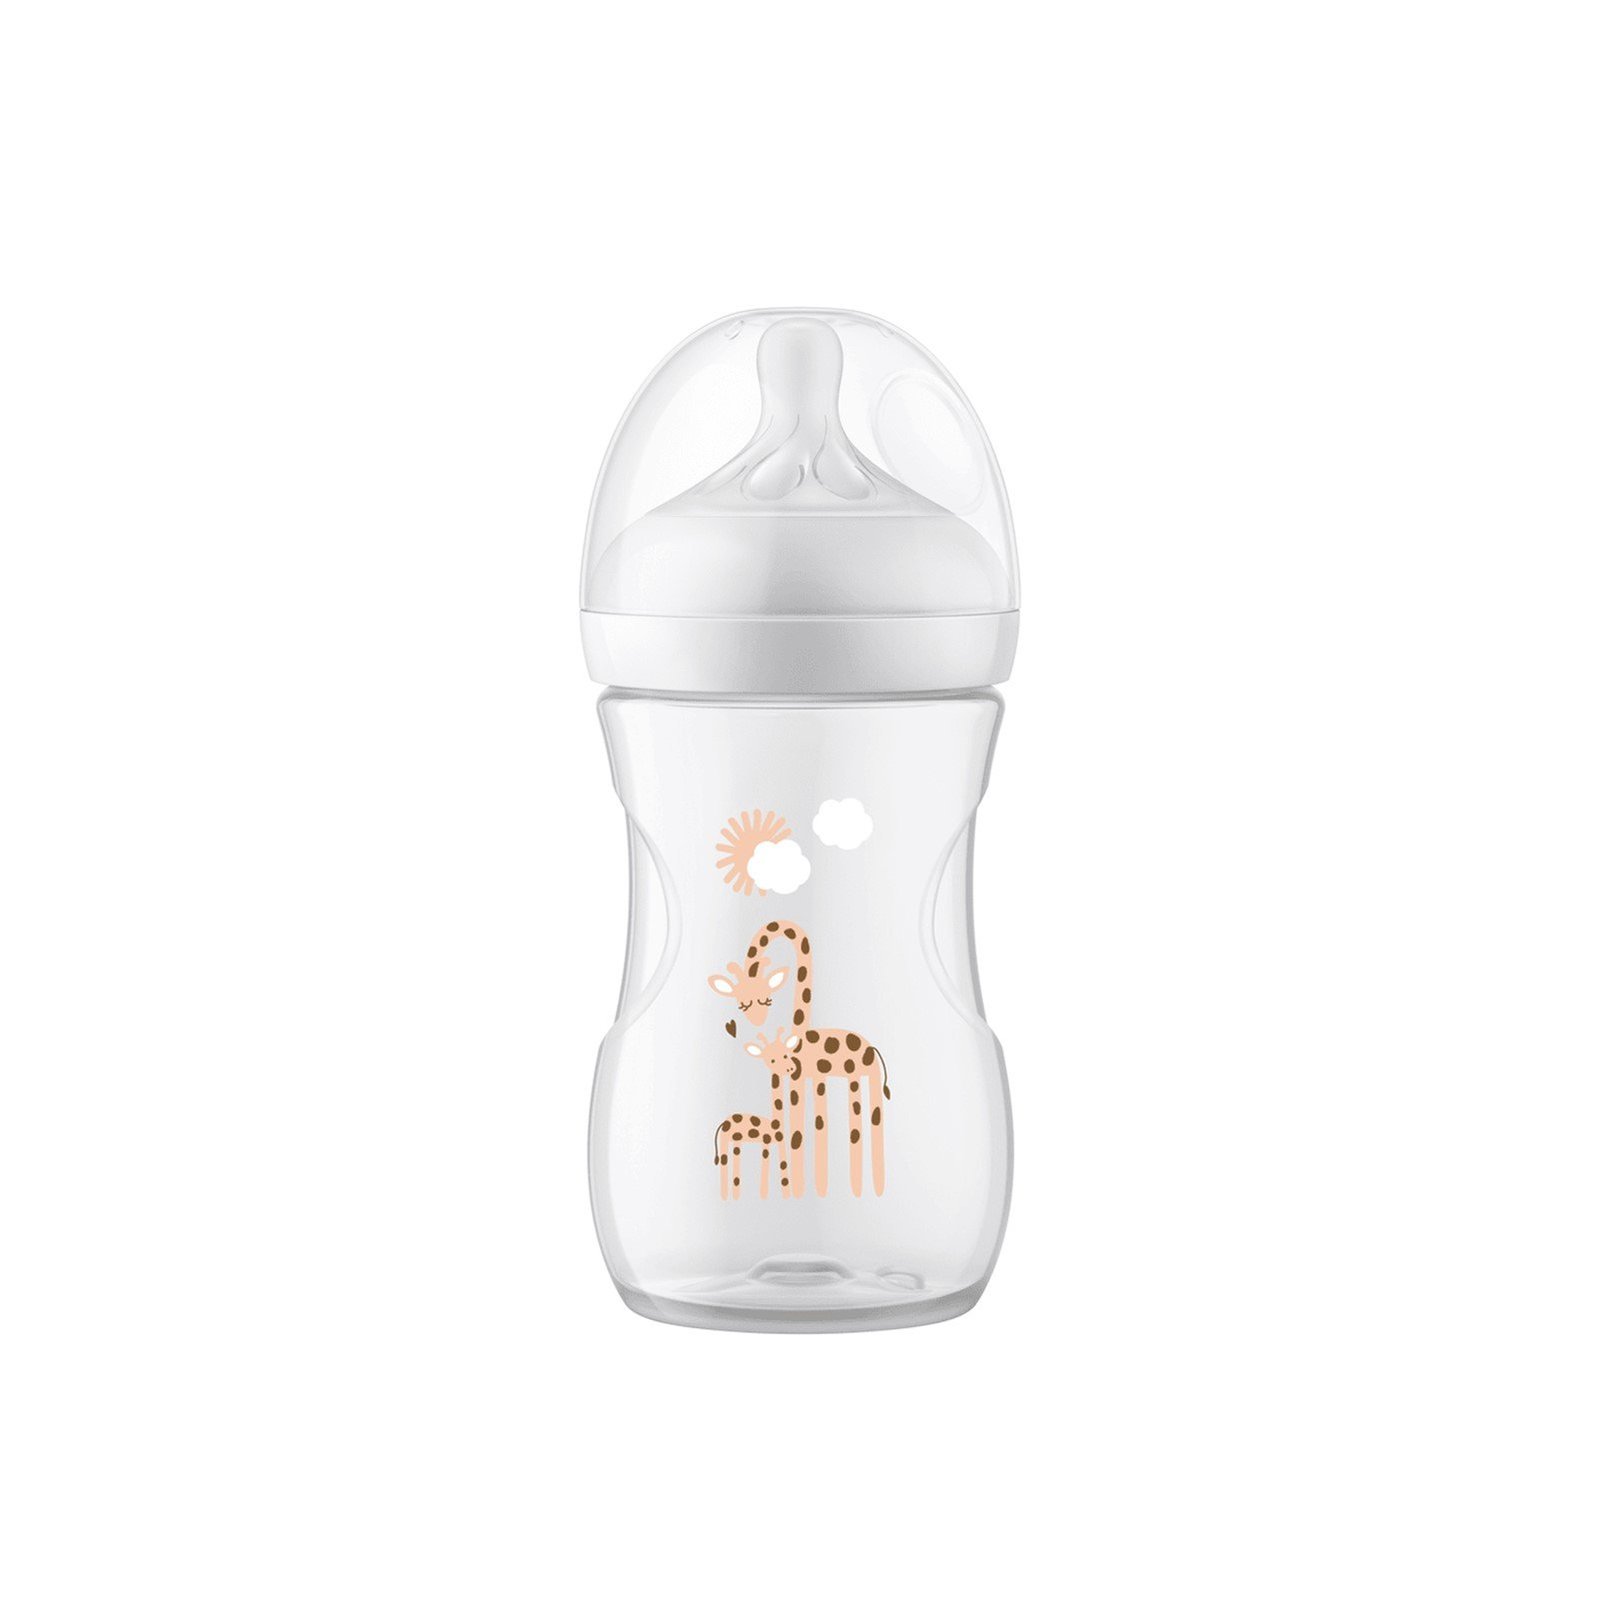 Buy Philips Avent Natural Response Baby Gift Set · USA